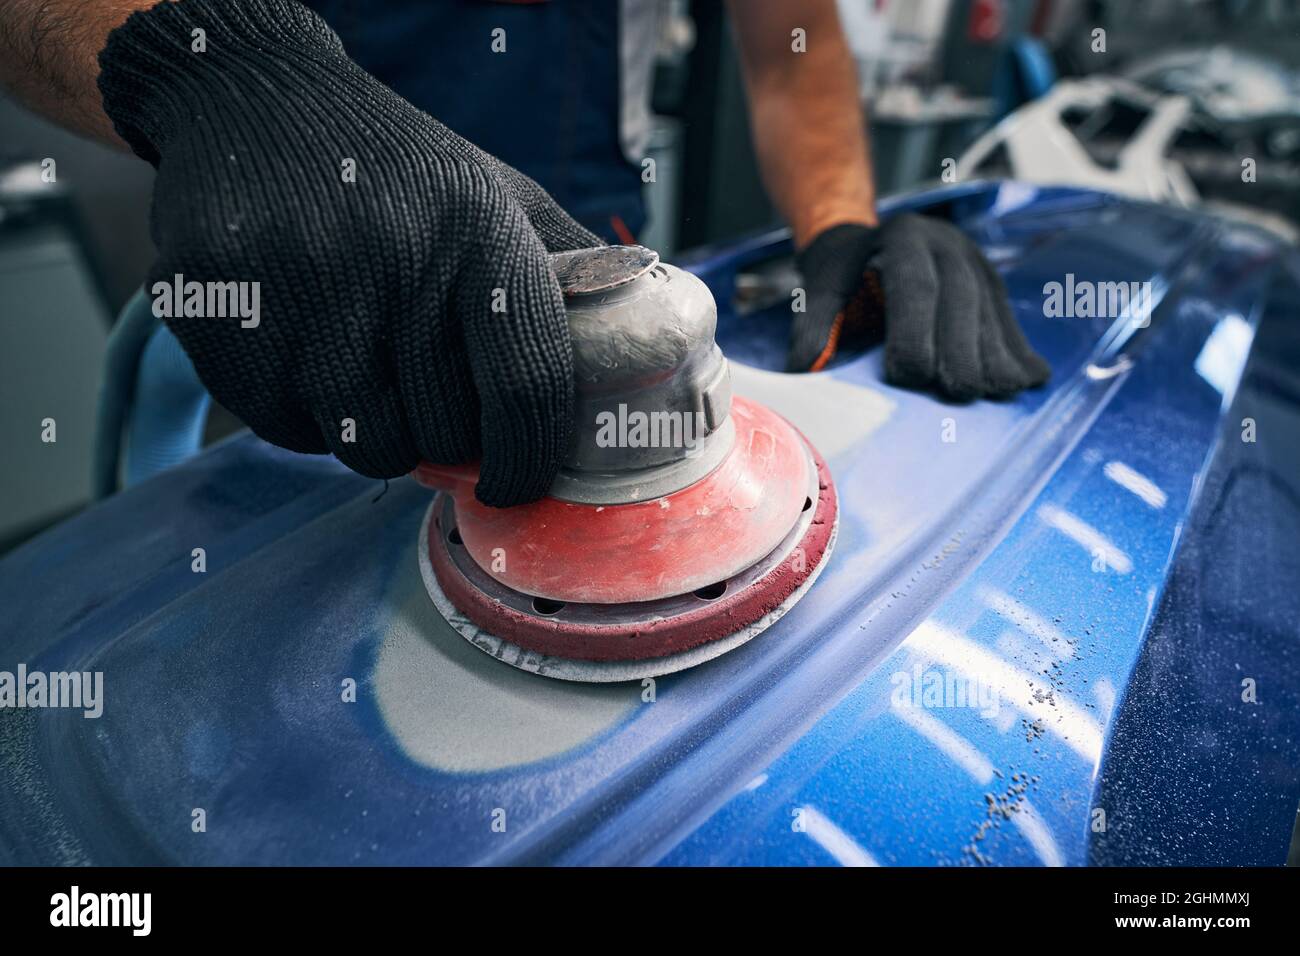 Sander grinding painted bumper in car workshop Stock Photo